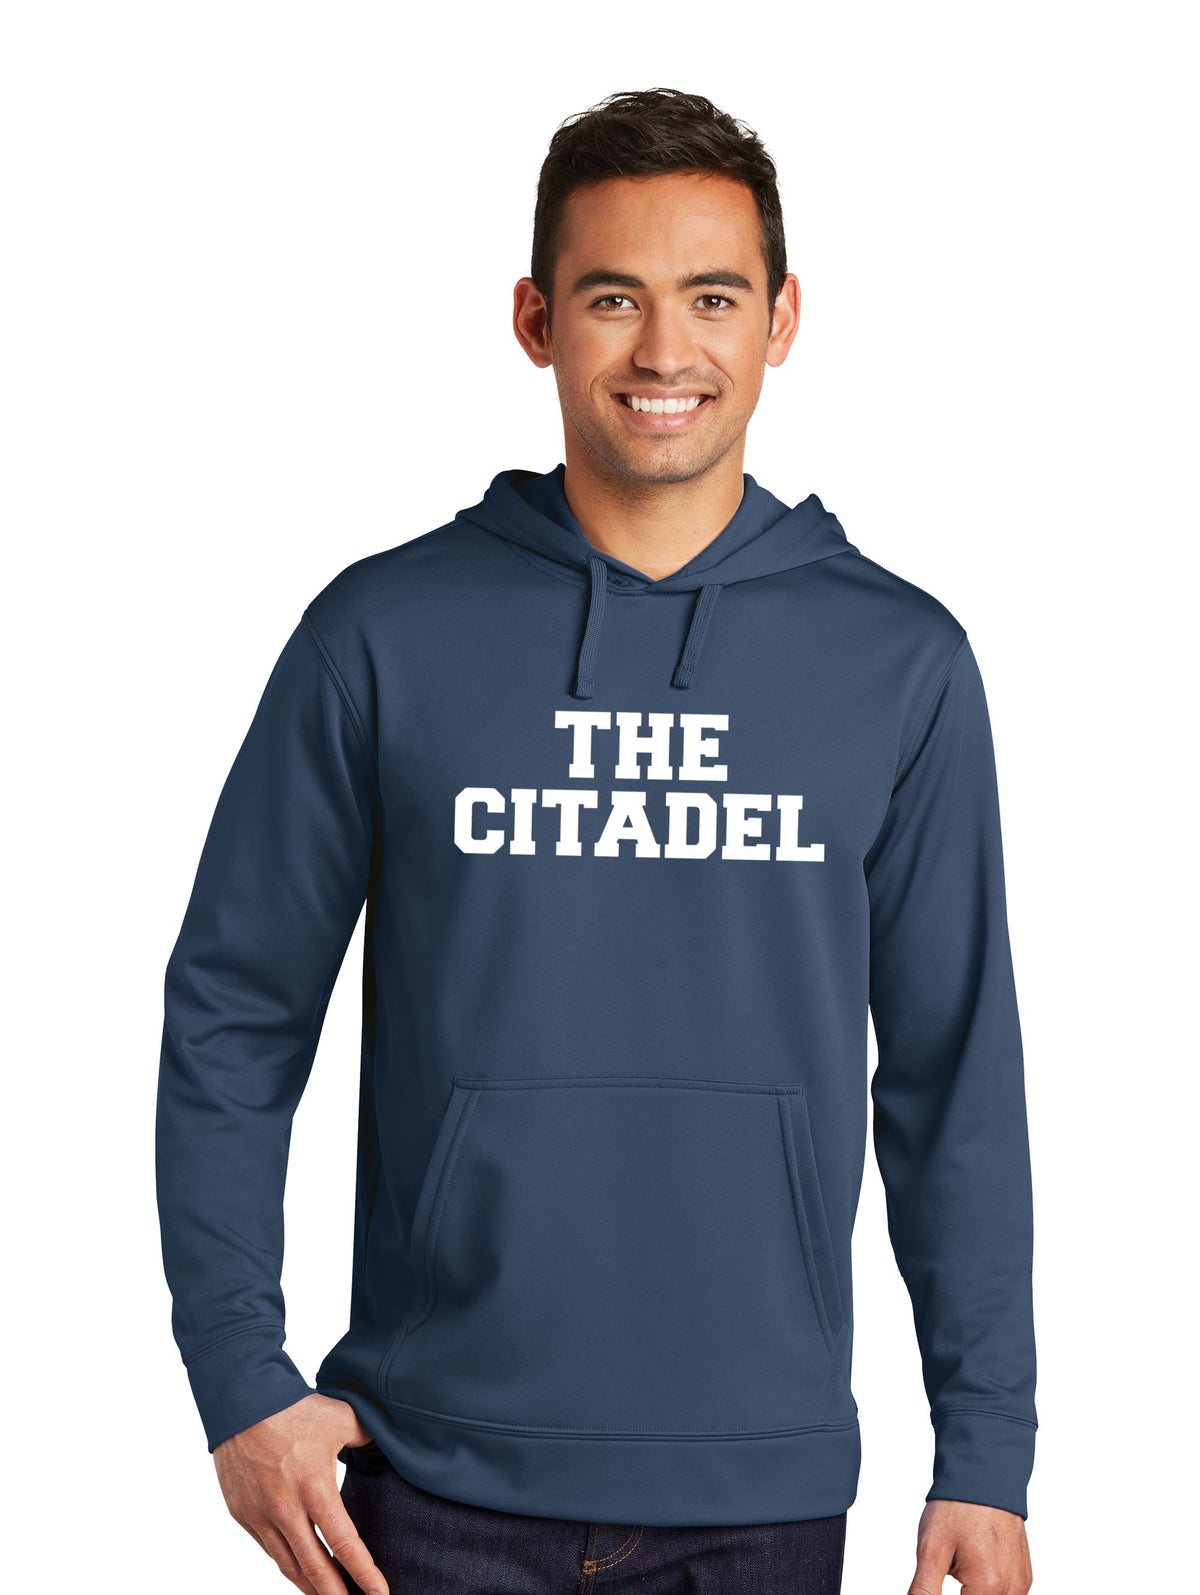 The Citadel, Pullover Hoodie Sweatshirt